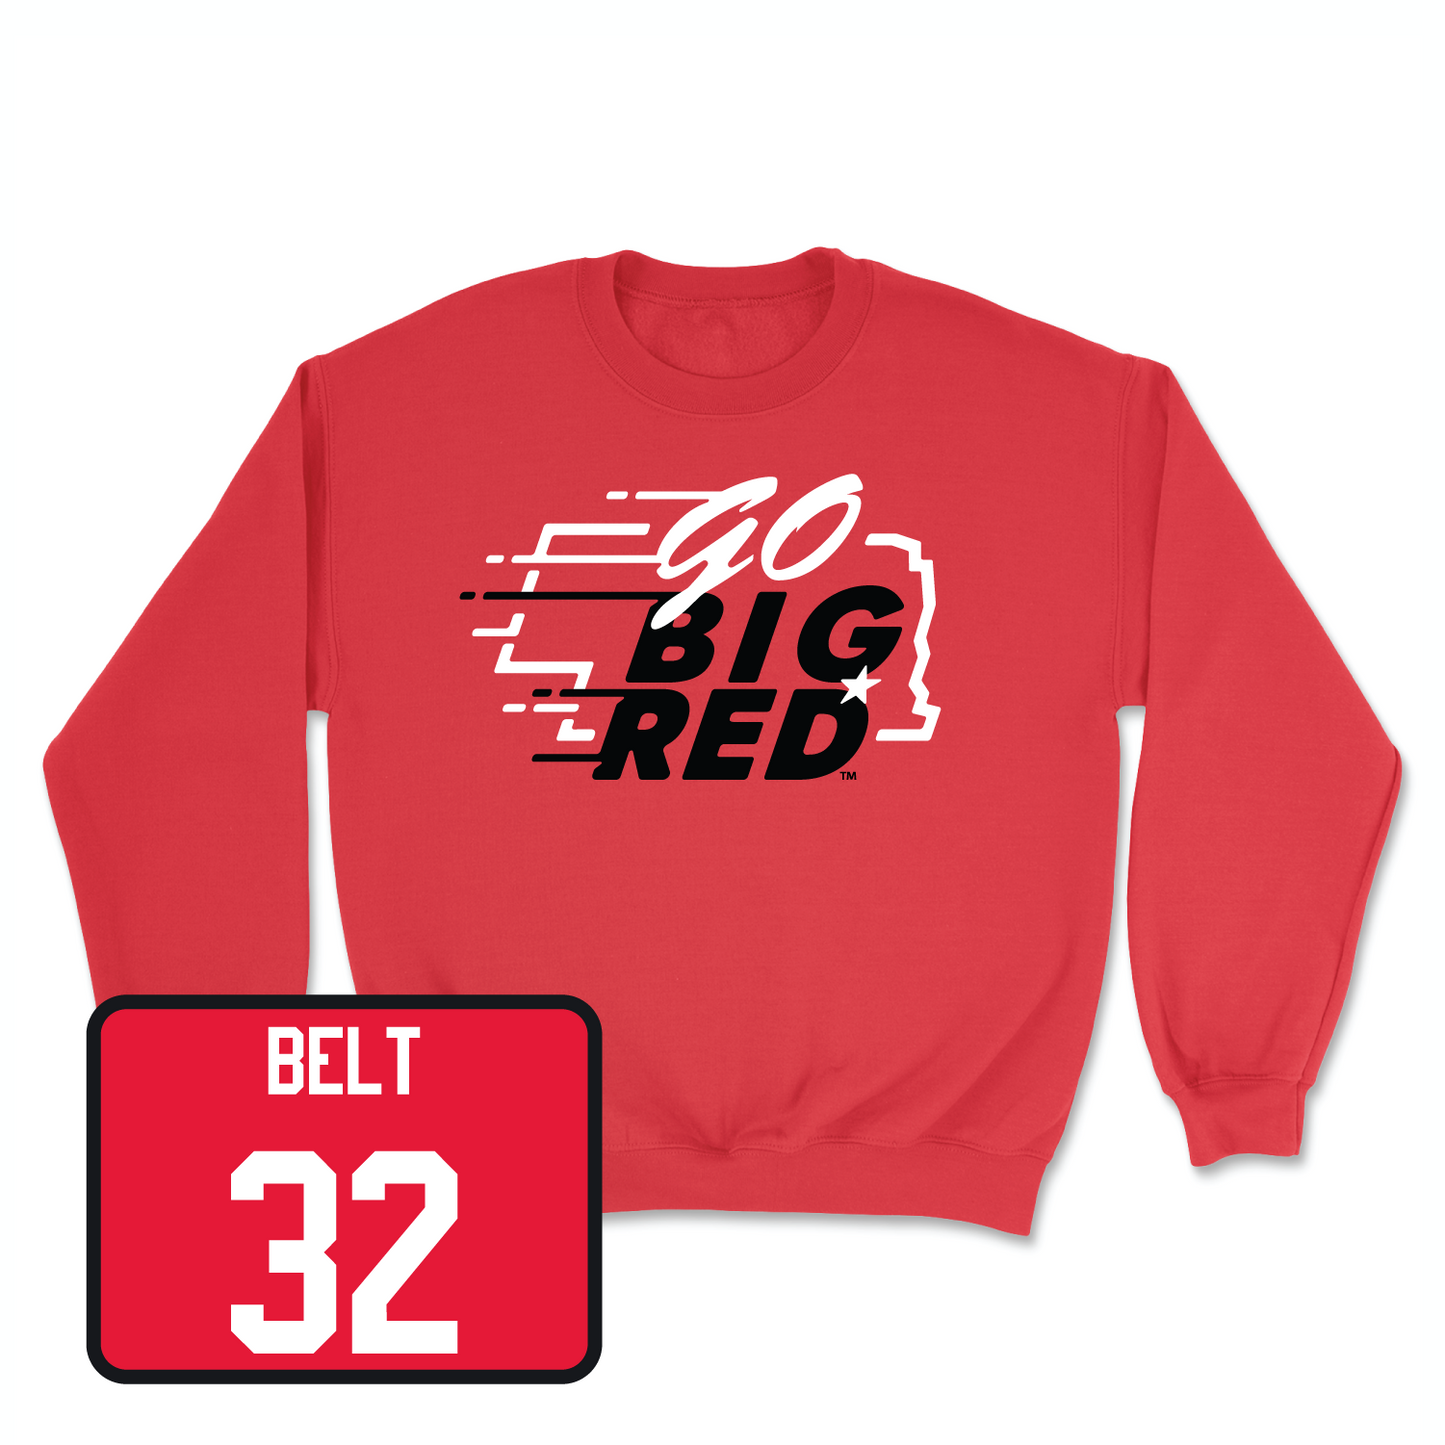 Red Football GBR Crew 4 Large / Brody Belt | #32